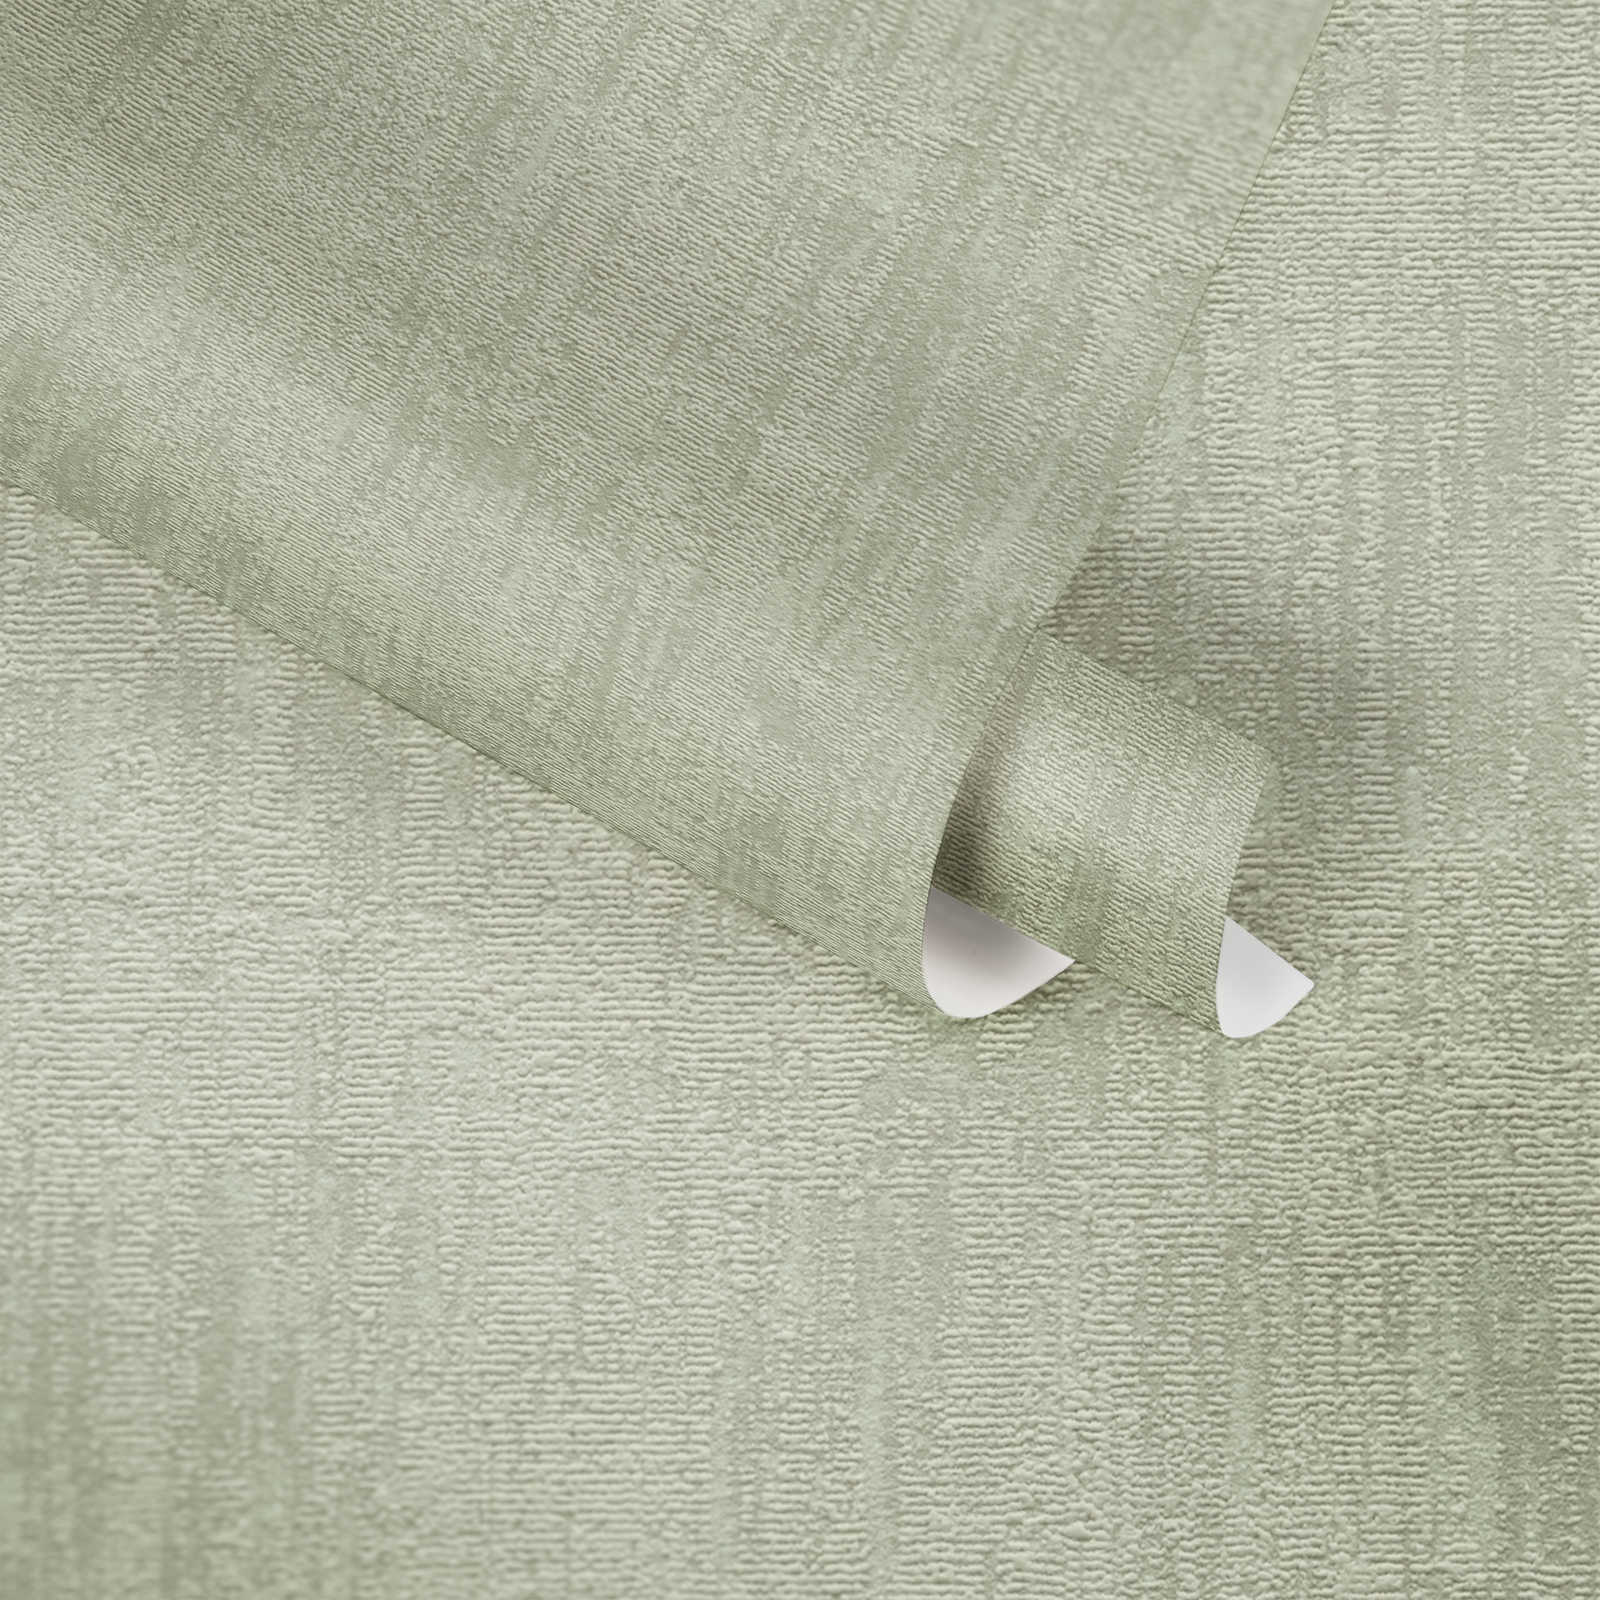             Abstract raffia patroon behang - groen
        